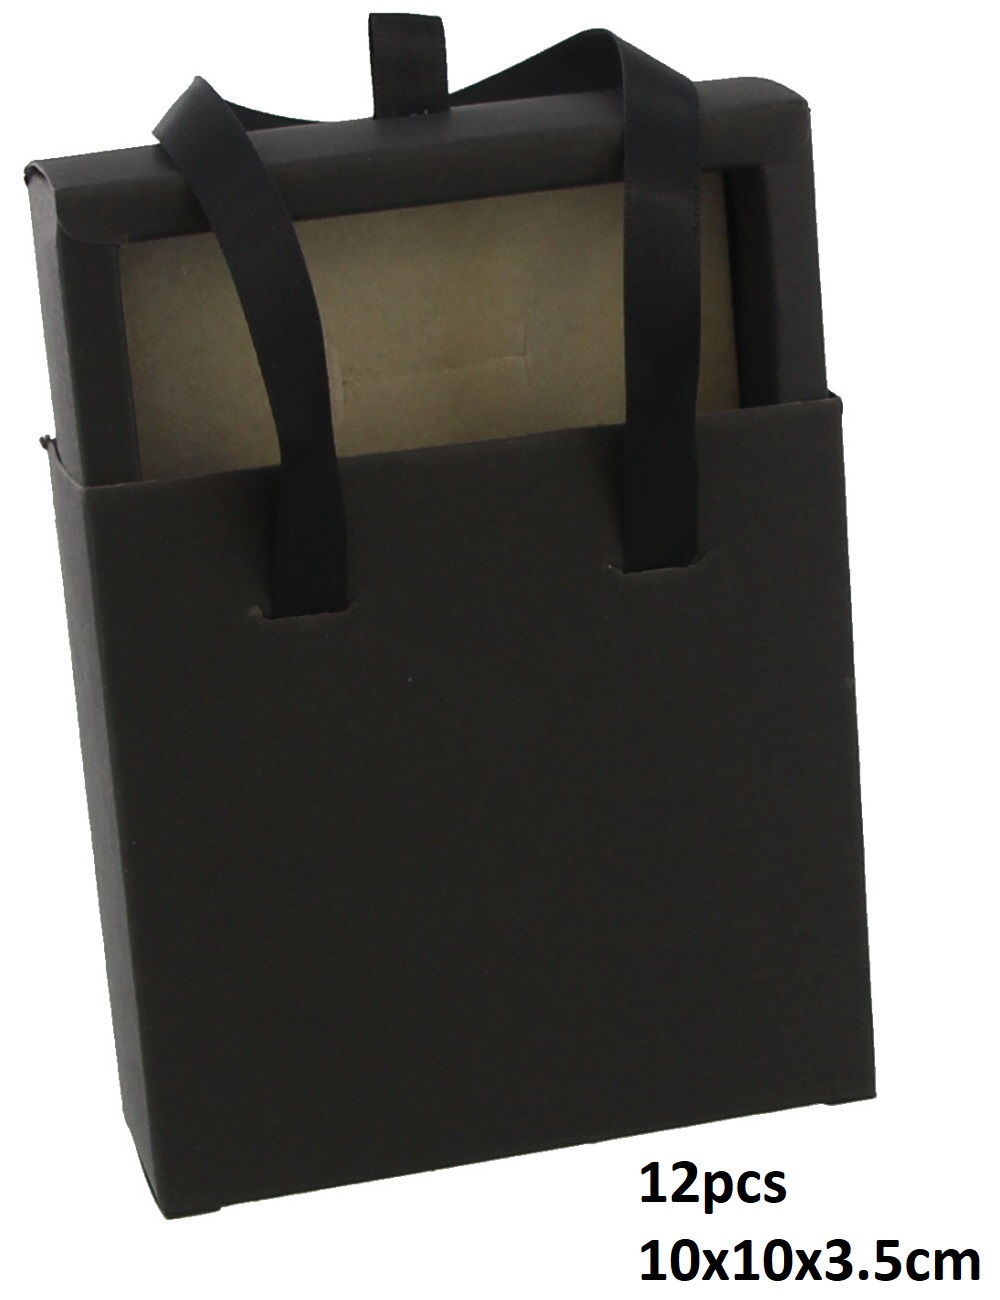 Z-F6.2 PK424-219 Gift Box for Jewelry 10x10x3.5cm - 12pcs